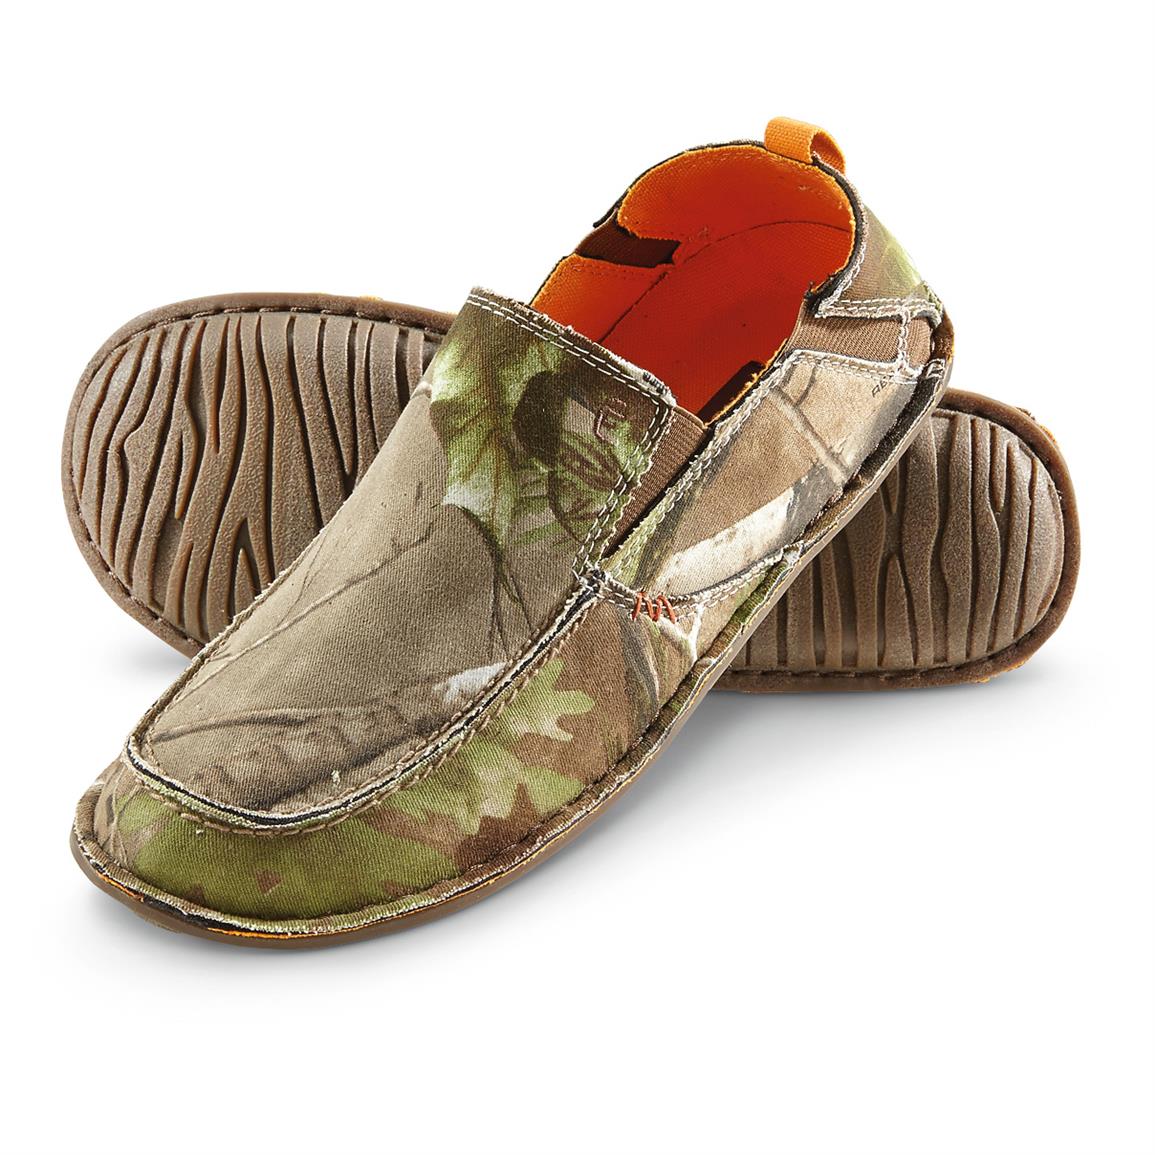 Crevo Men's Marley Slip-On Shoes, Realtree APG Camo - 652739, Casual ...